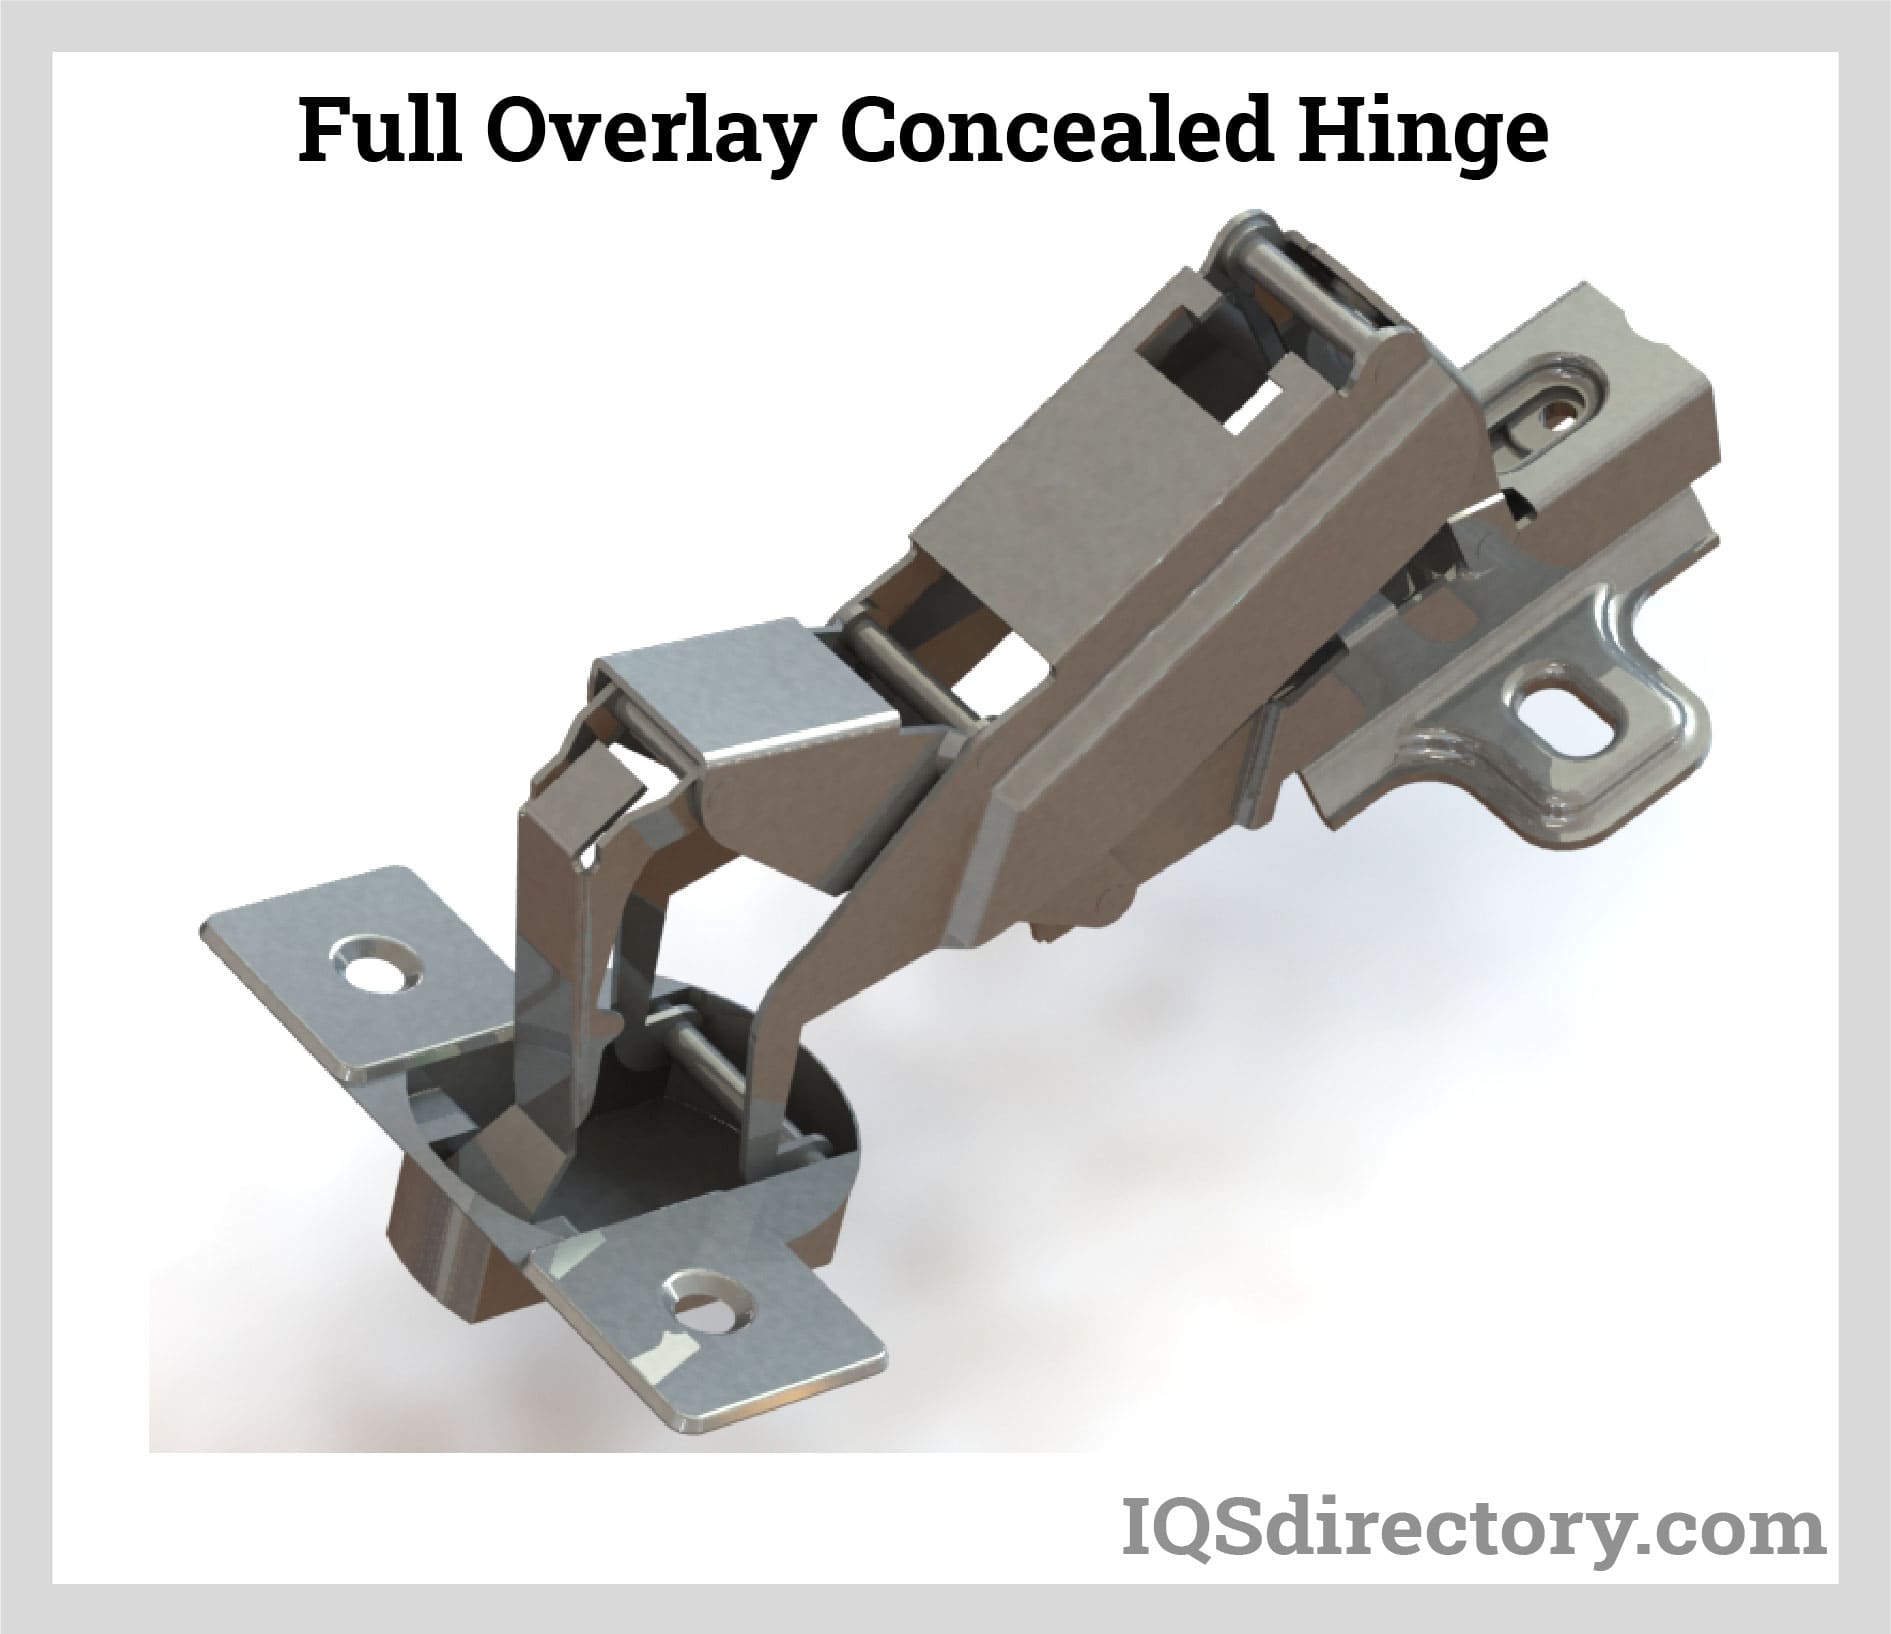 Full Overlay Concealed Hinge